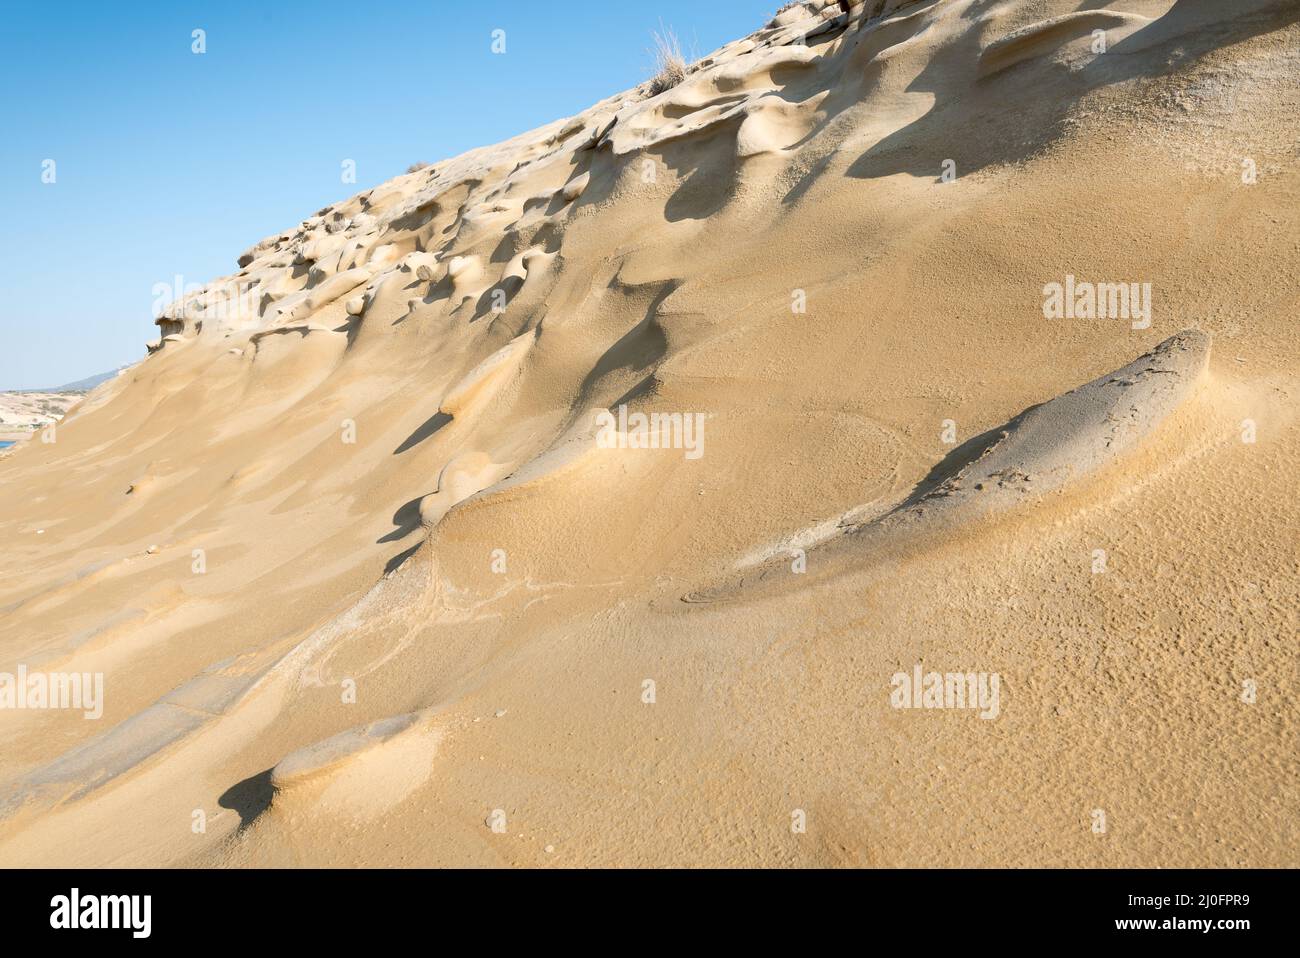 Dry desert land with sand dunes. Cyprus Stock Photo